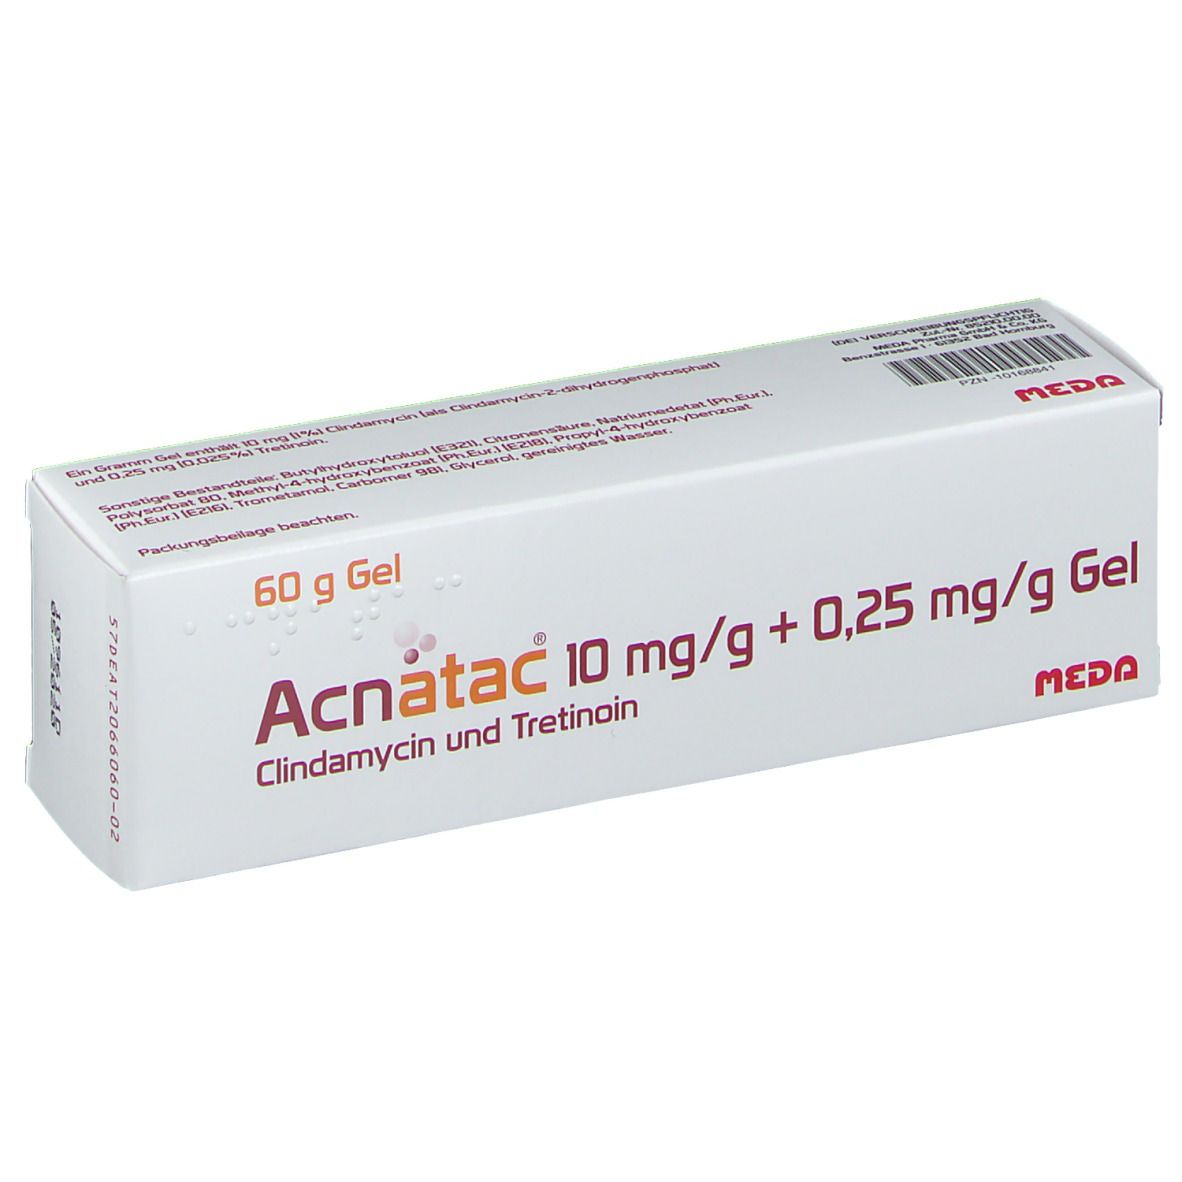 Acnatac® 10 mg/g + 0,25 mg/g